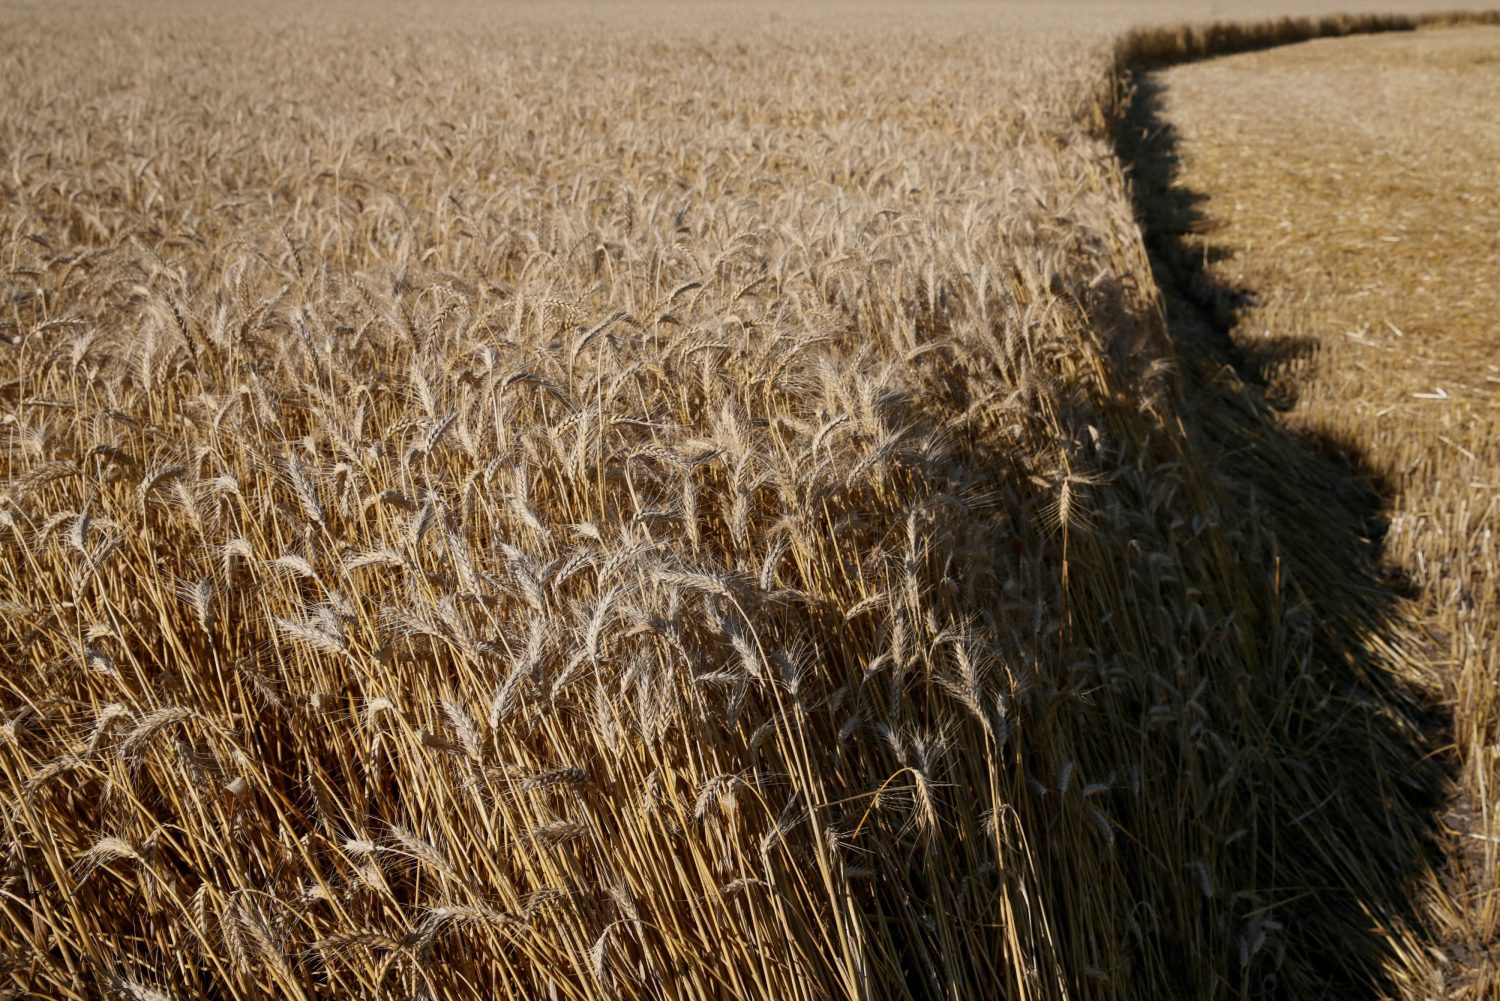 Ukraine is finally ready to embrace land reform